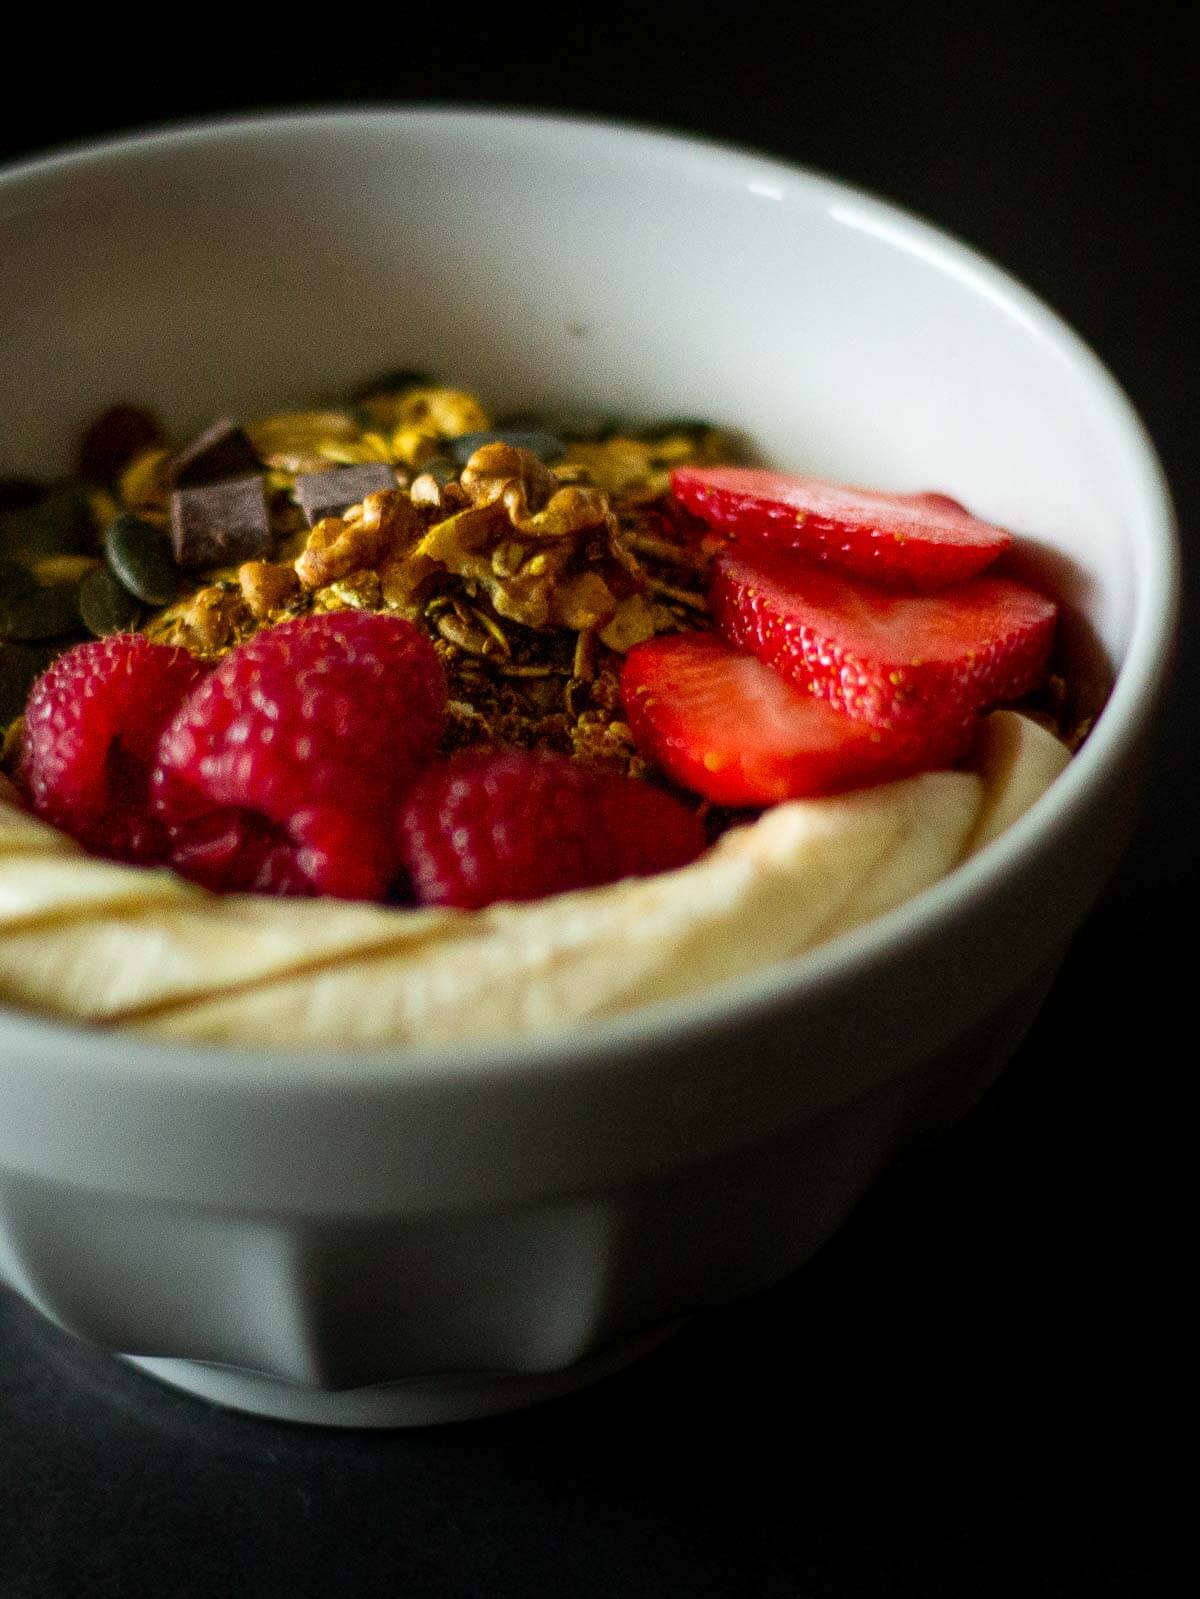 homemade granola bowl with strawberries and bananas